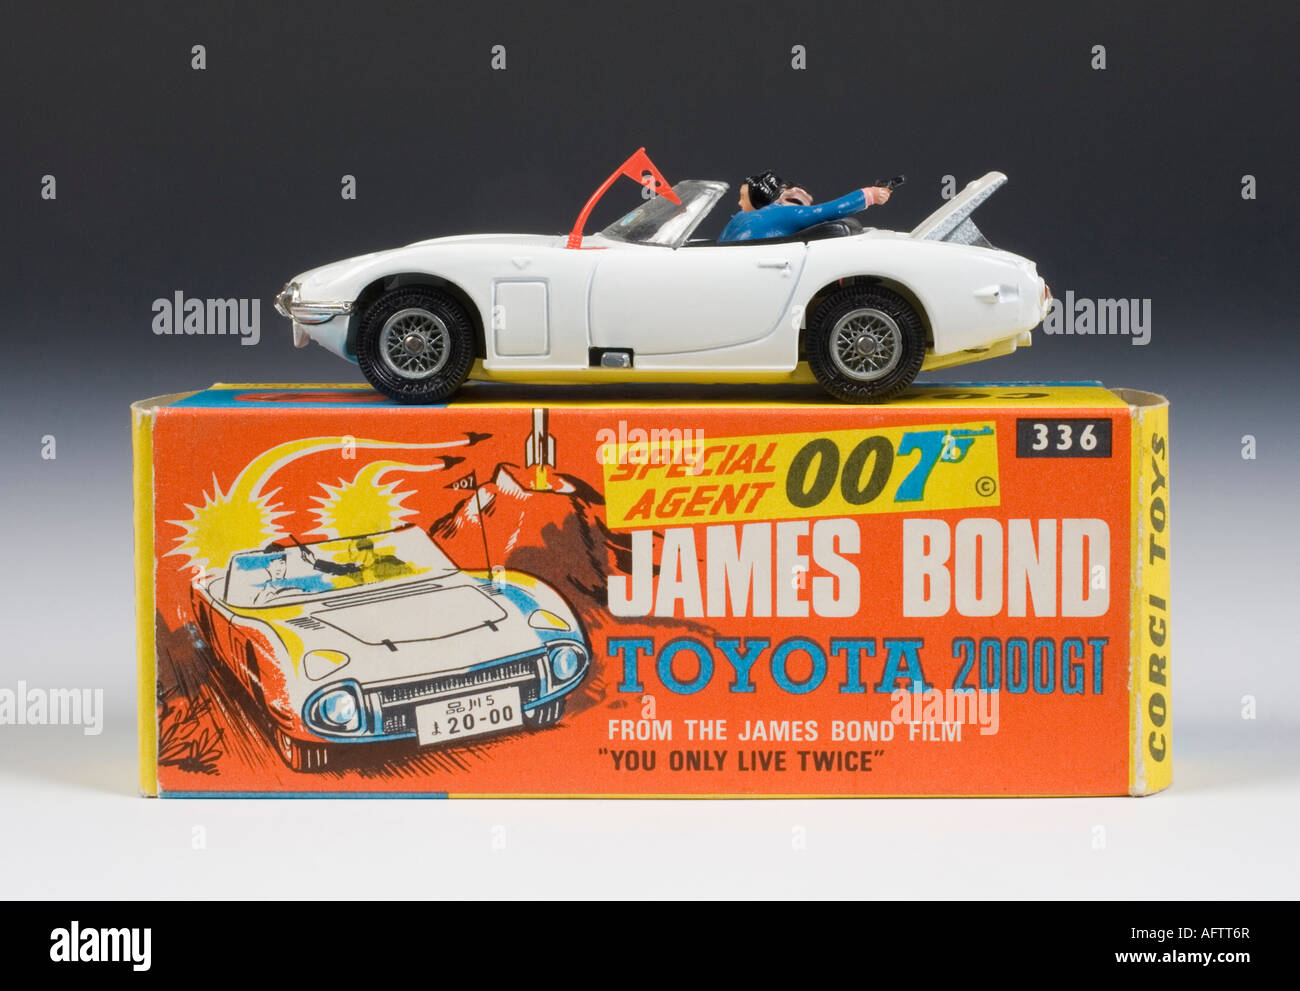 Jamed Bond Toyota 2000 Corgi Diecast Modell keine 336 Ausgabe 1967. Wie in den James Bond film "You Only Live Twice" Stockfoto